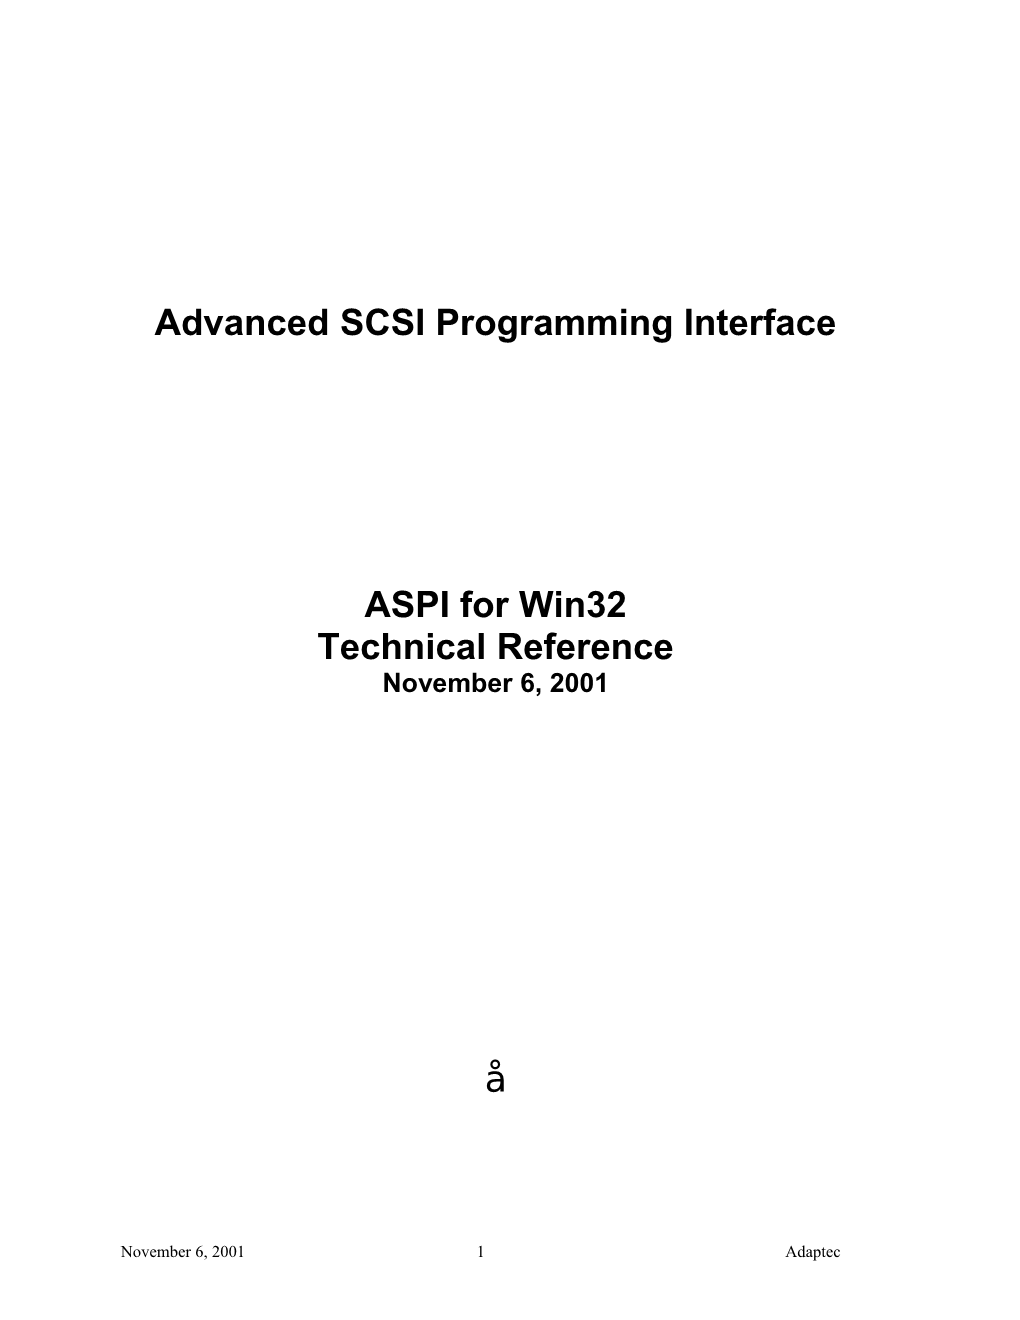 Advanced SCSI Programming Interface (ASPI)